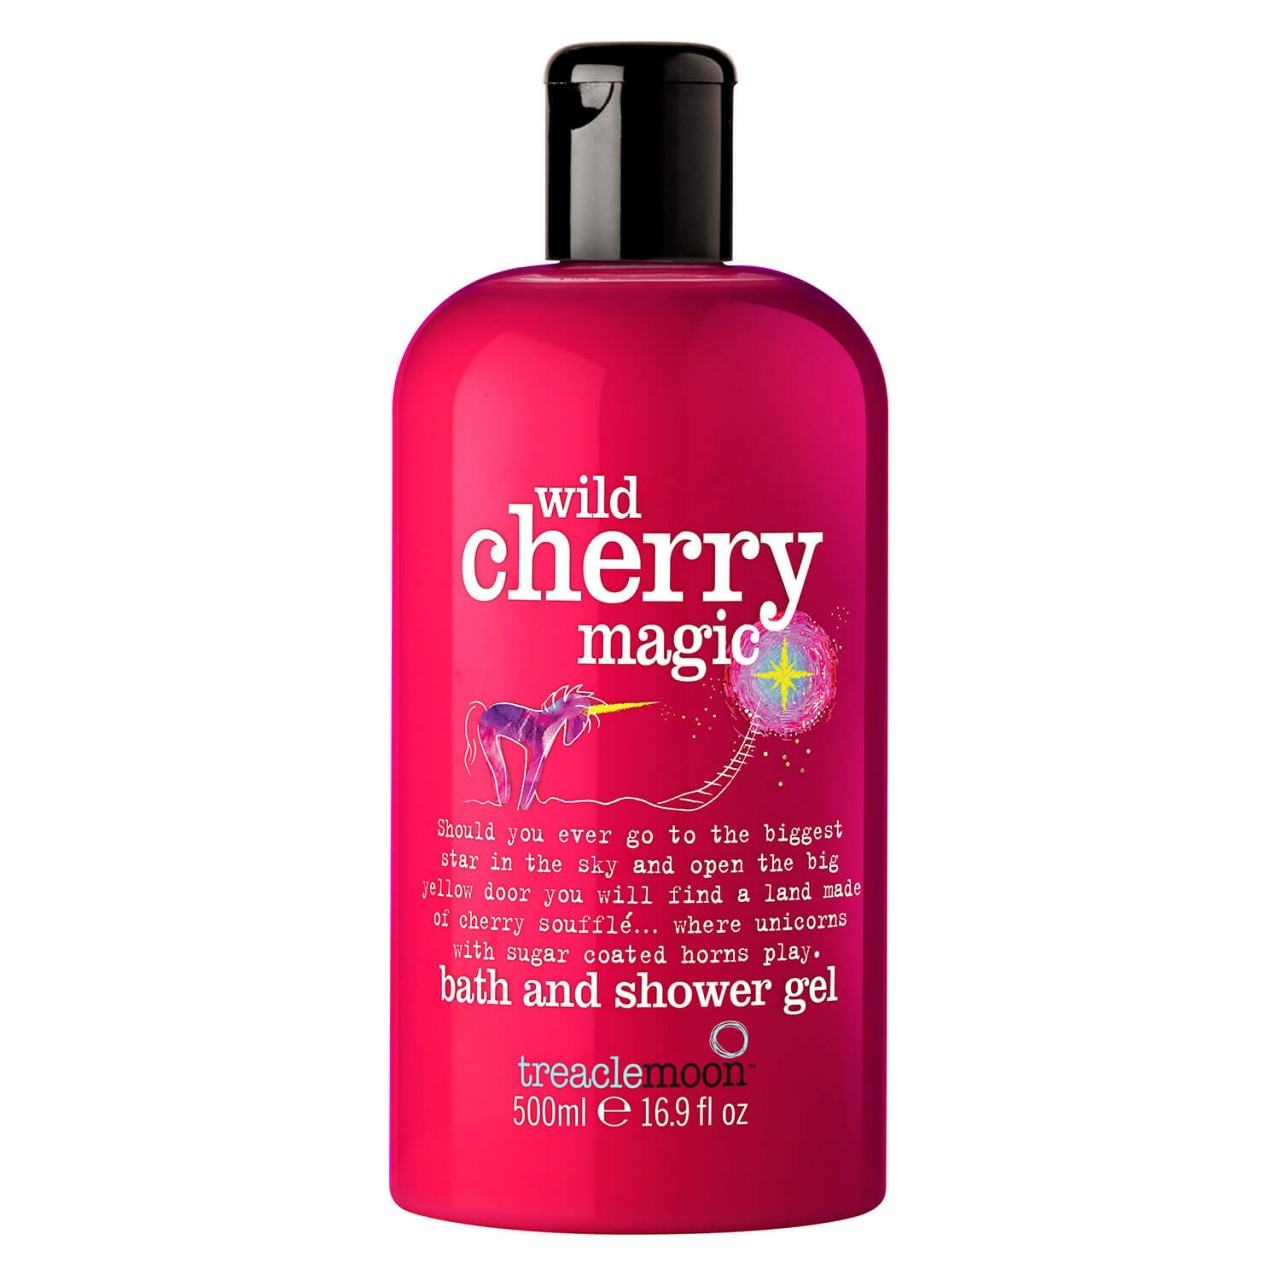 treaclemoon - wild cherry magic shower and bath gel von treaclemoon